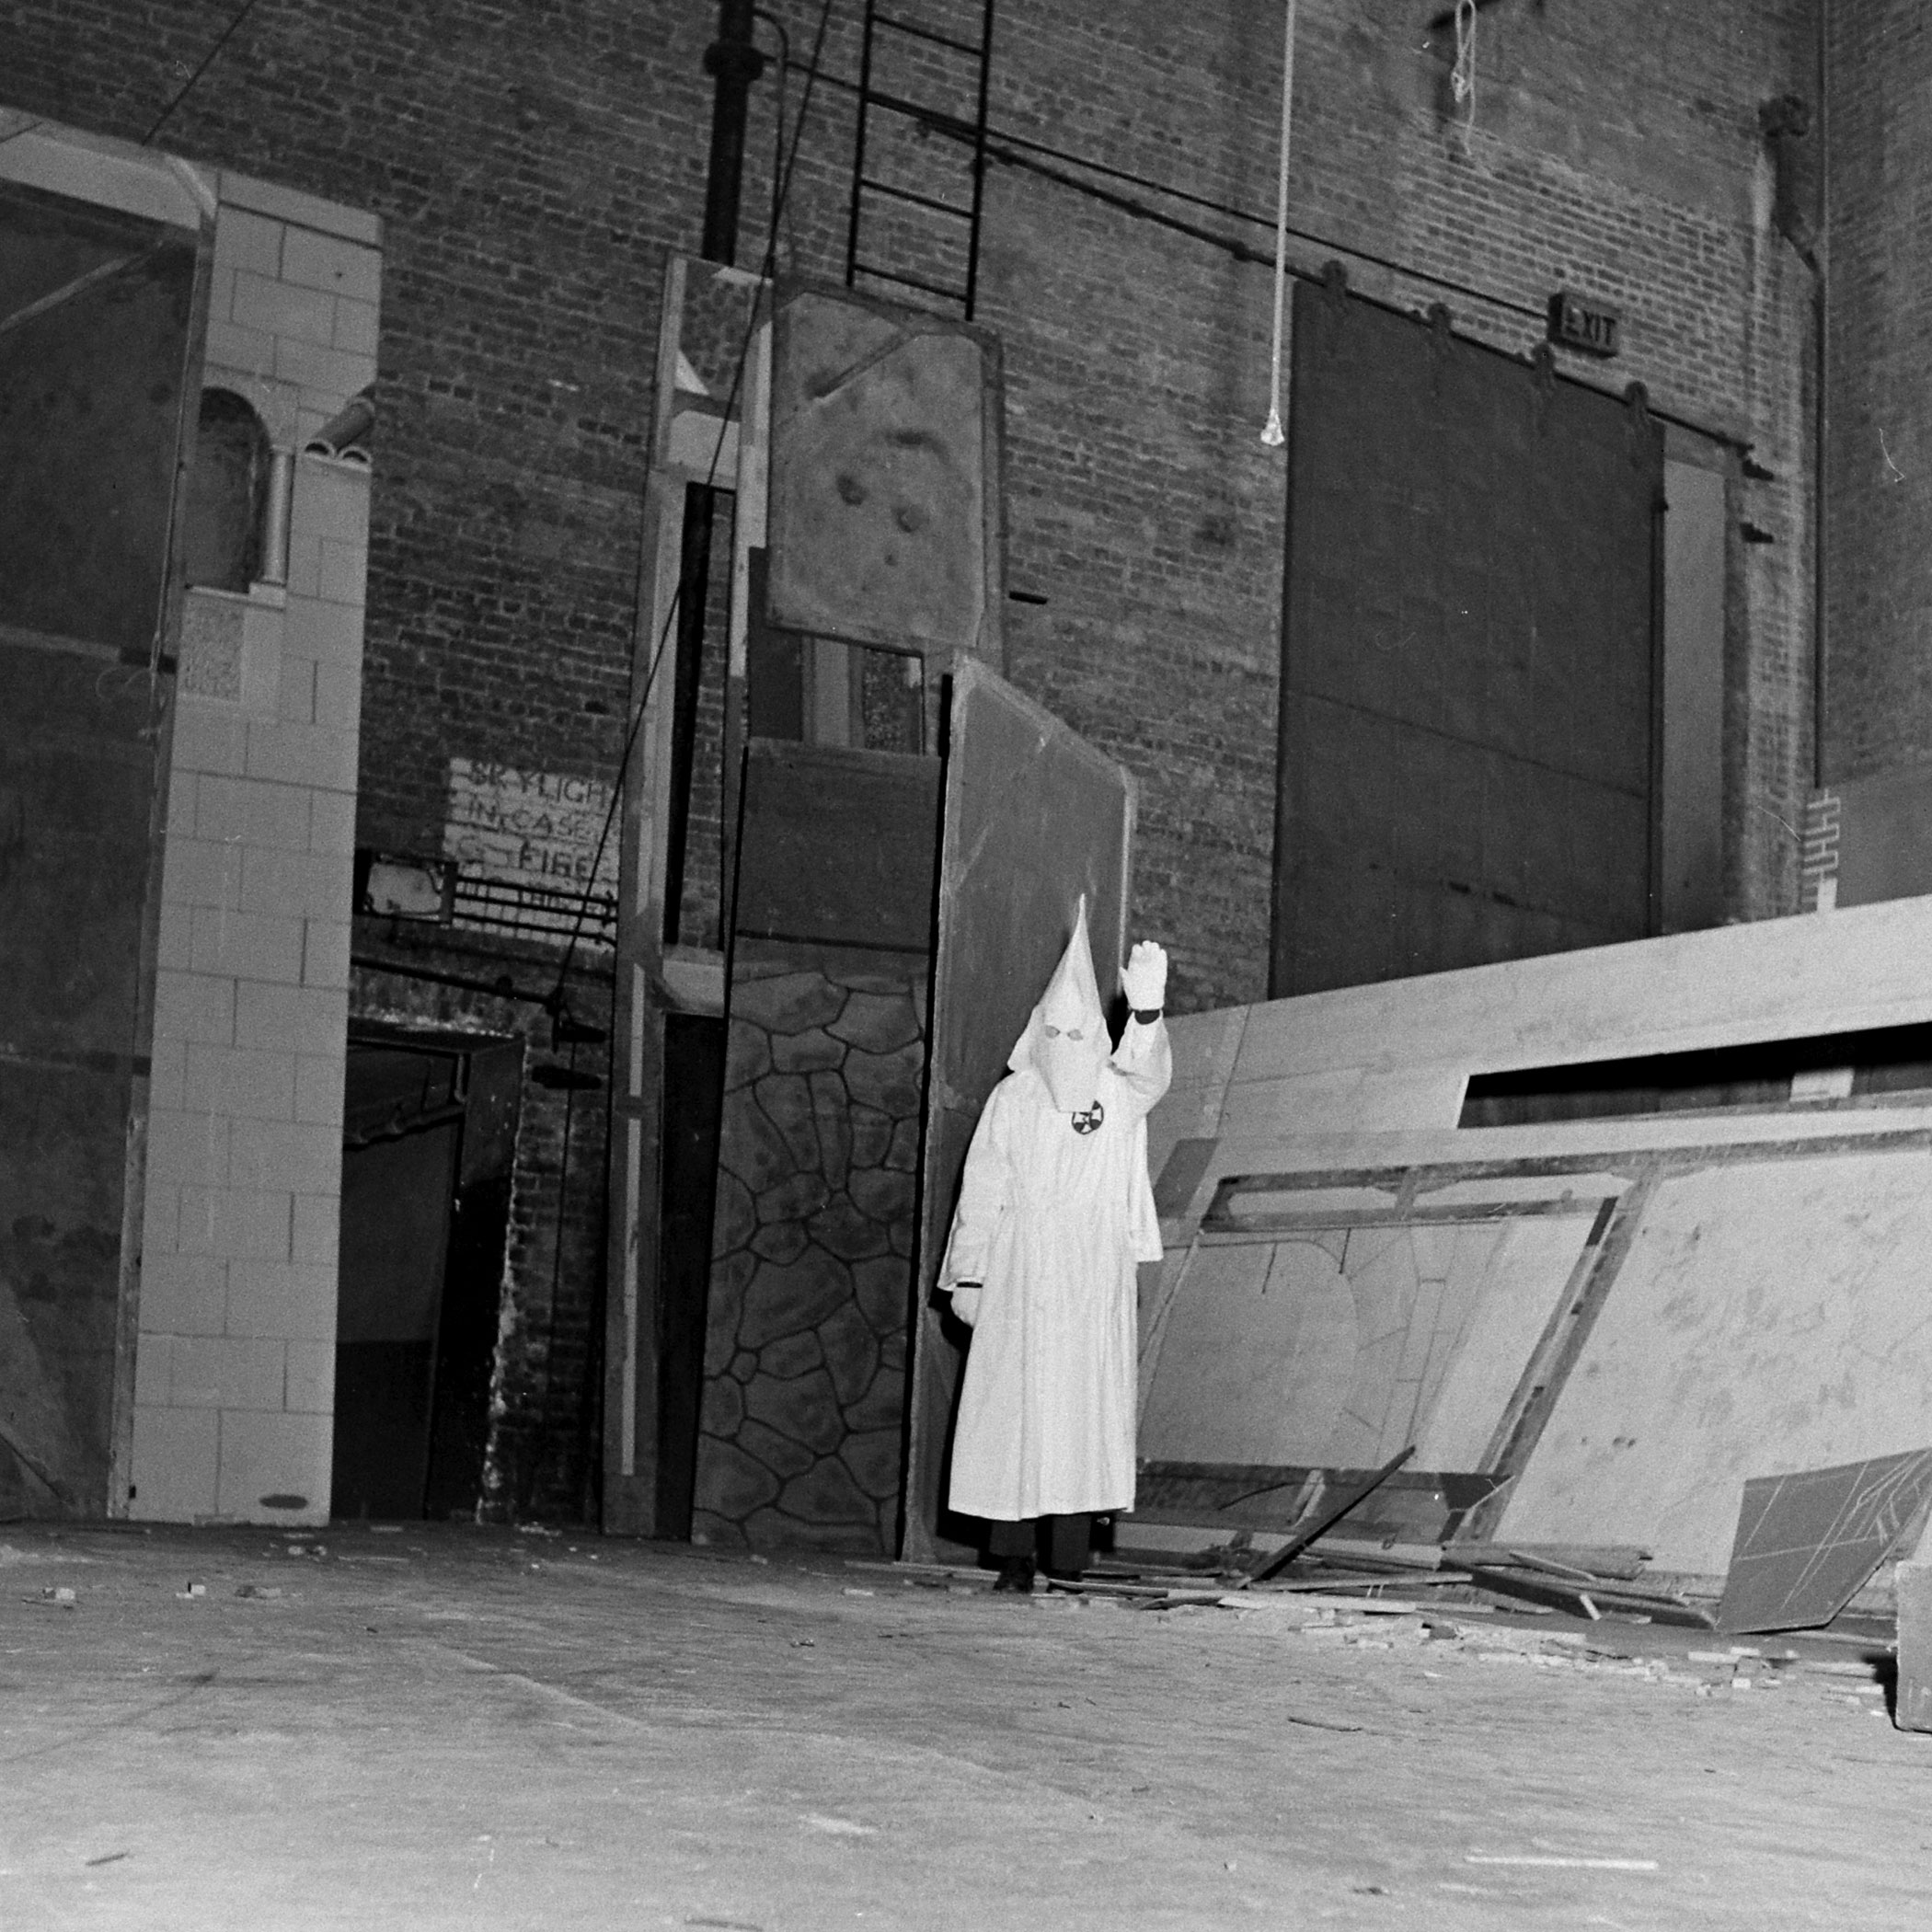 A Ku Klux Klan member demonstrates ritualistic aspects of a KKK meeting, Georgia, May 1946.